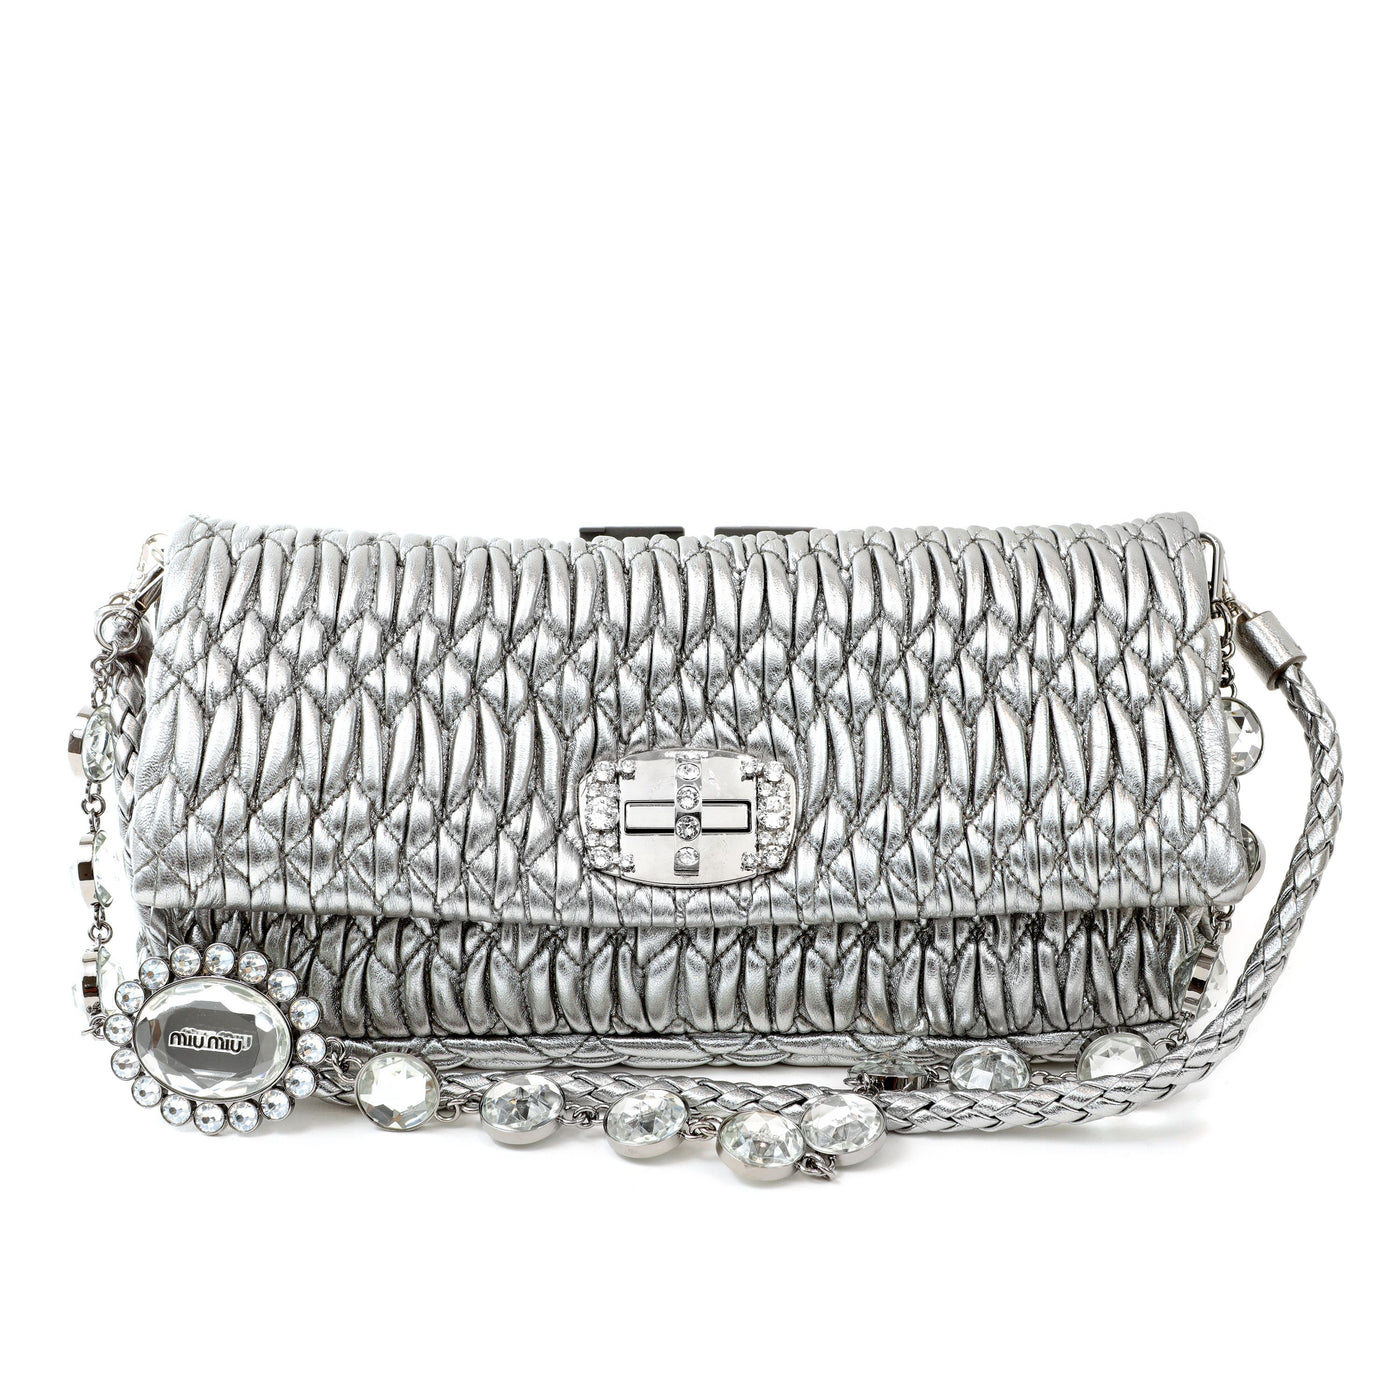 Miu Miu Metallic Silver Crystal Cloquè Small Bag with Silver Hardware